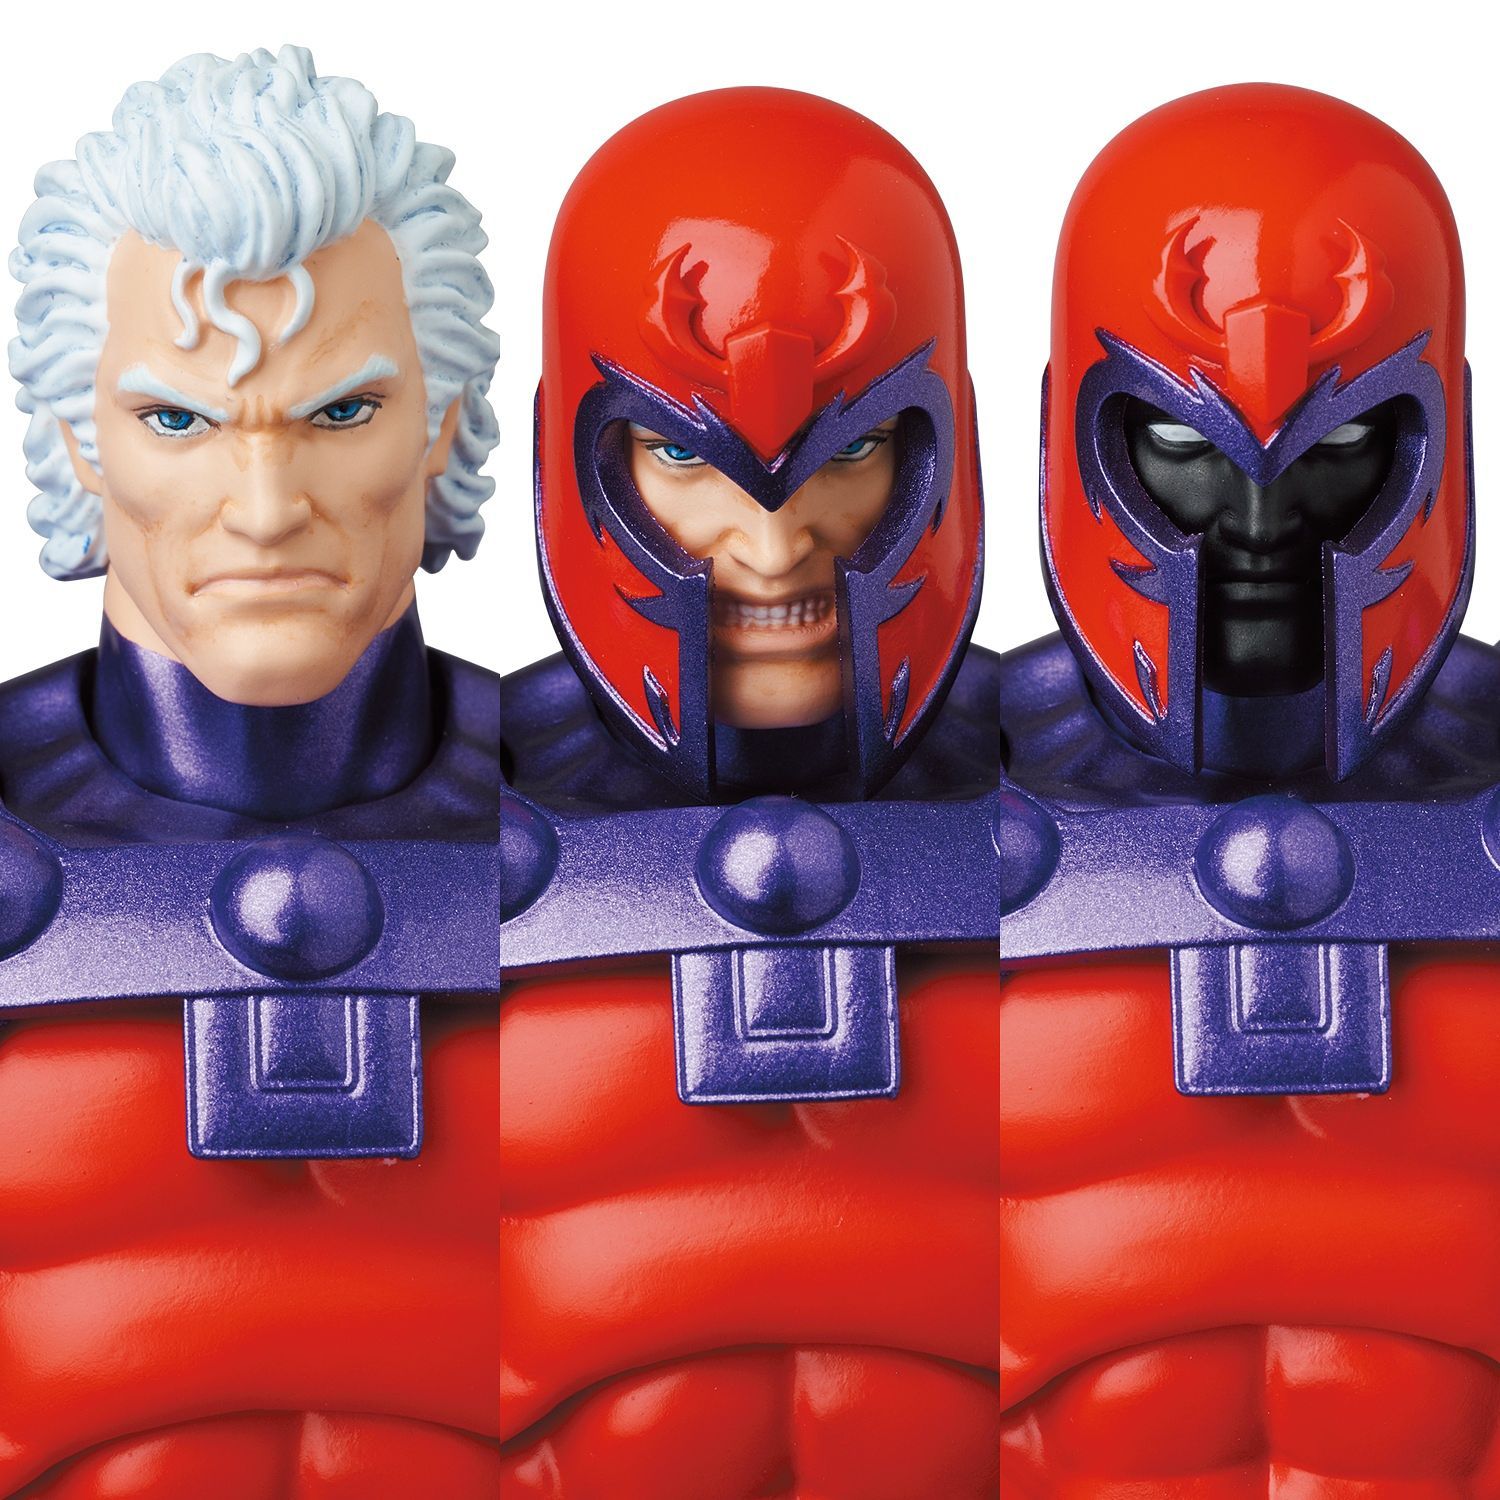 MAFEX Magneto (Original Comic Ver.)